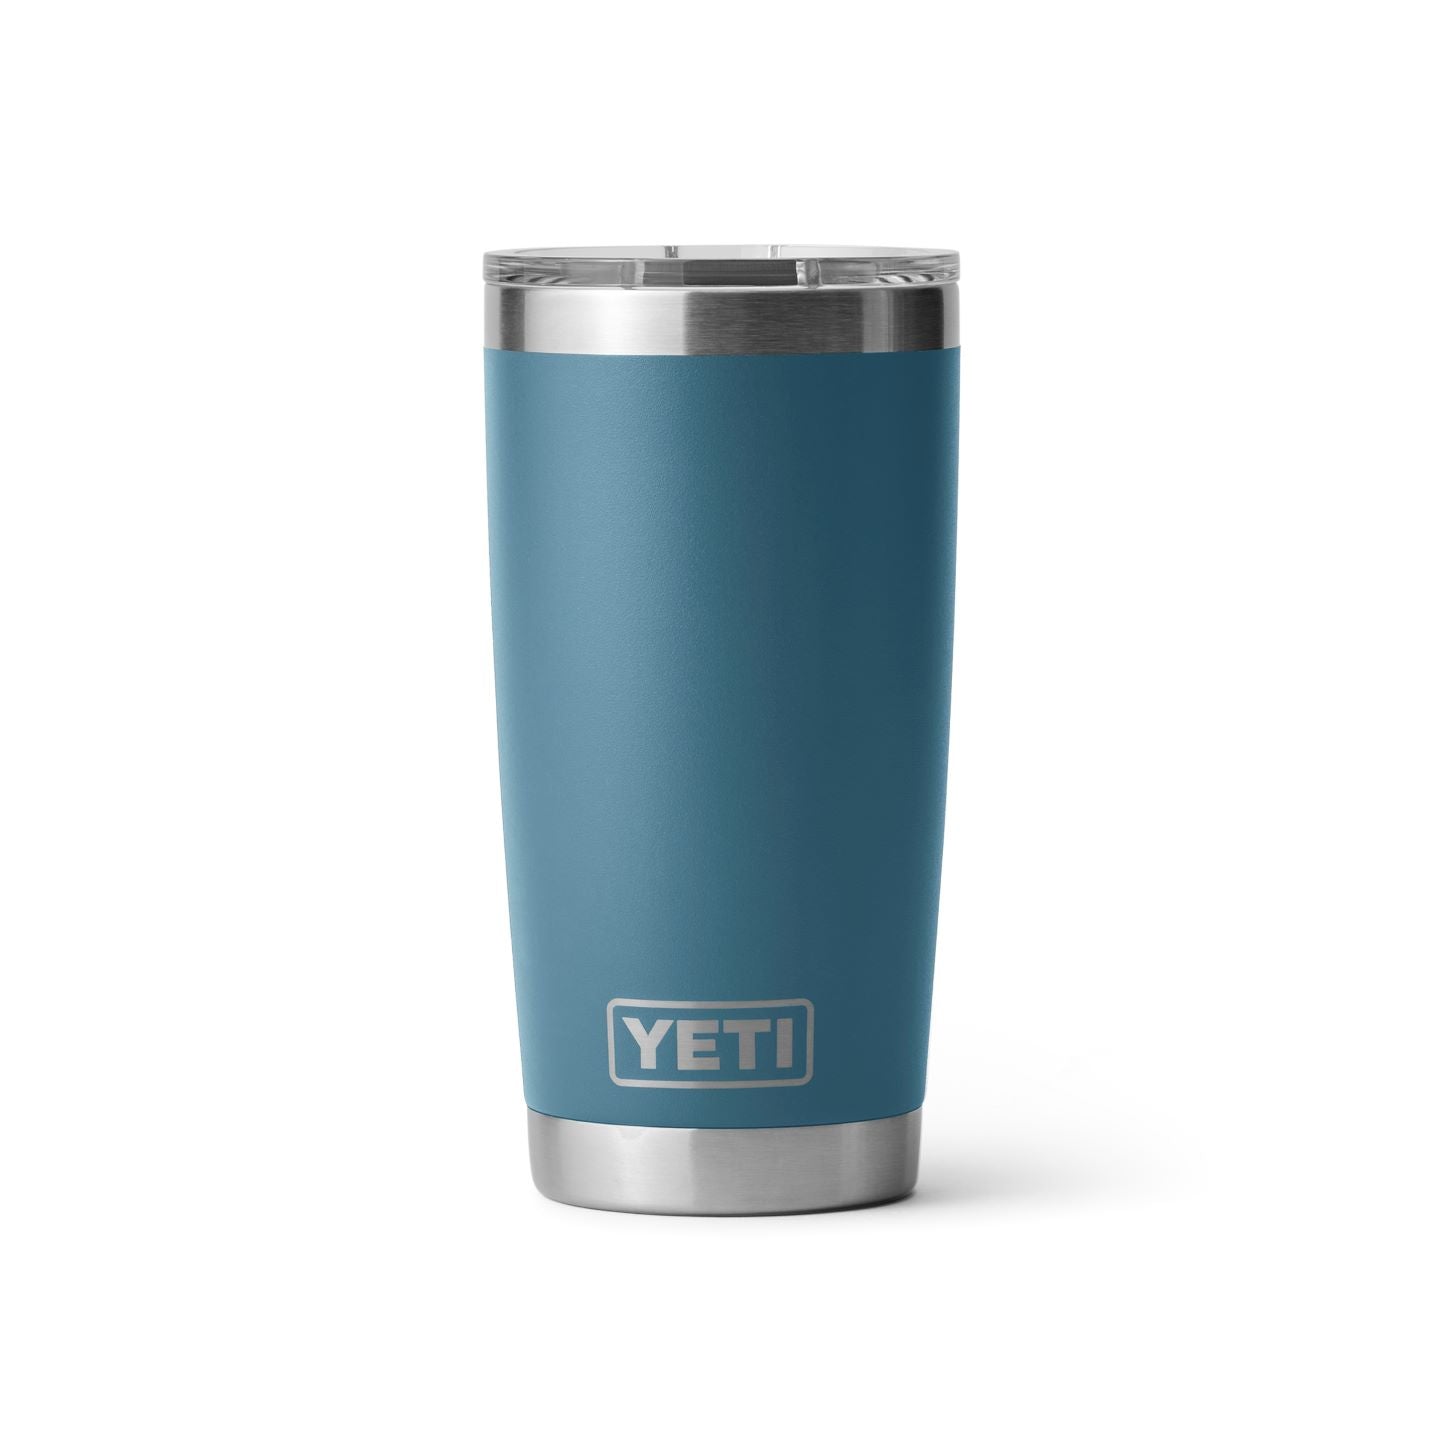 'YETI' 20 oz. Rambler Insulated Tumbler - Nordic Blue